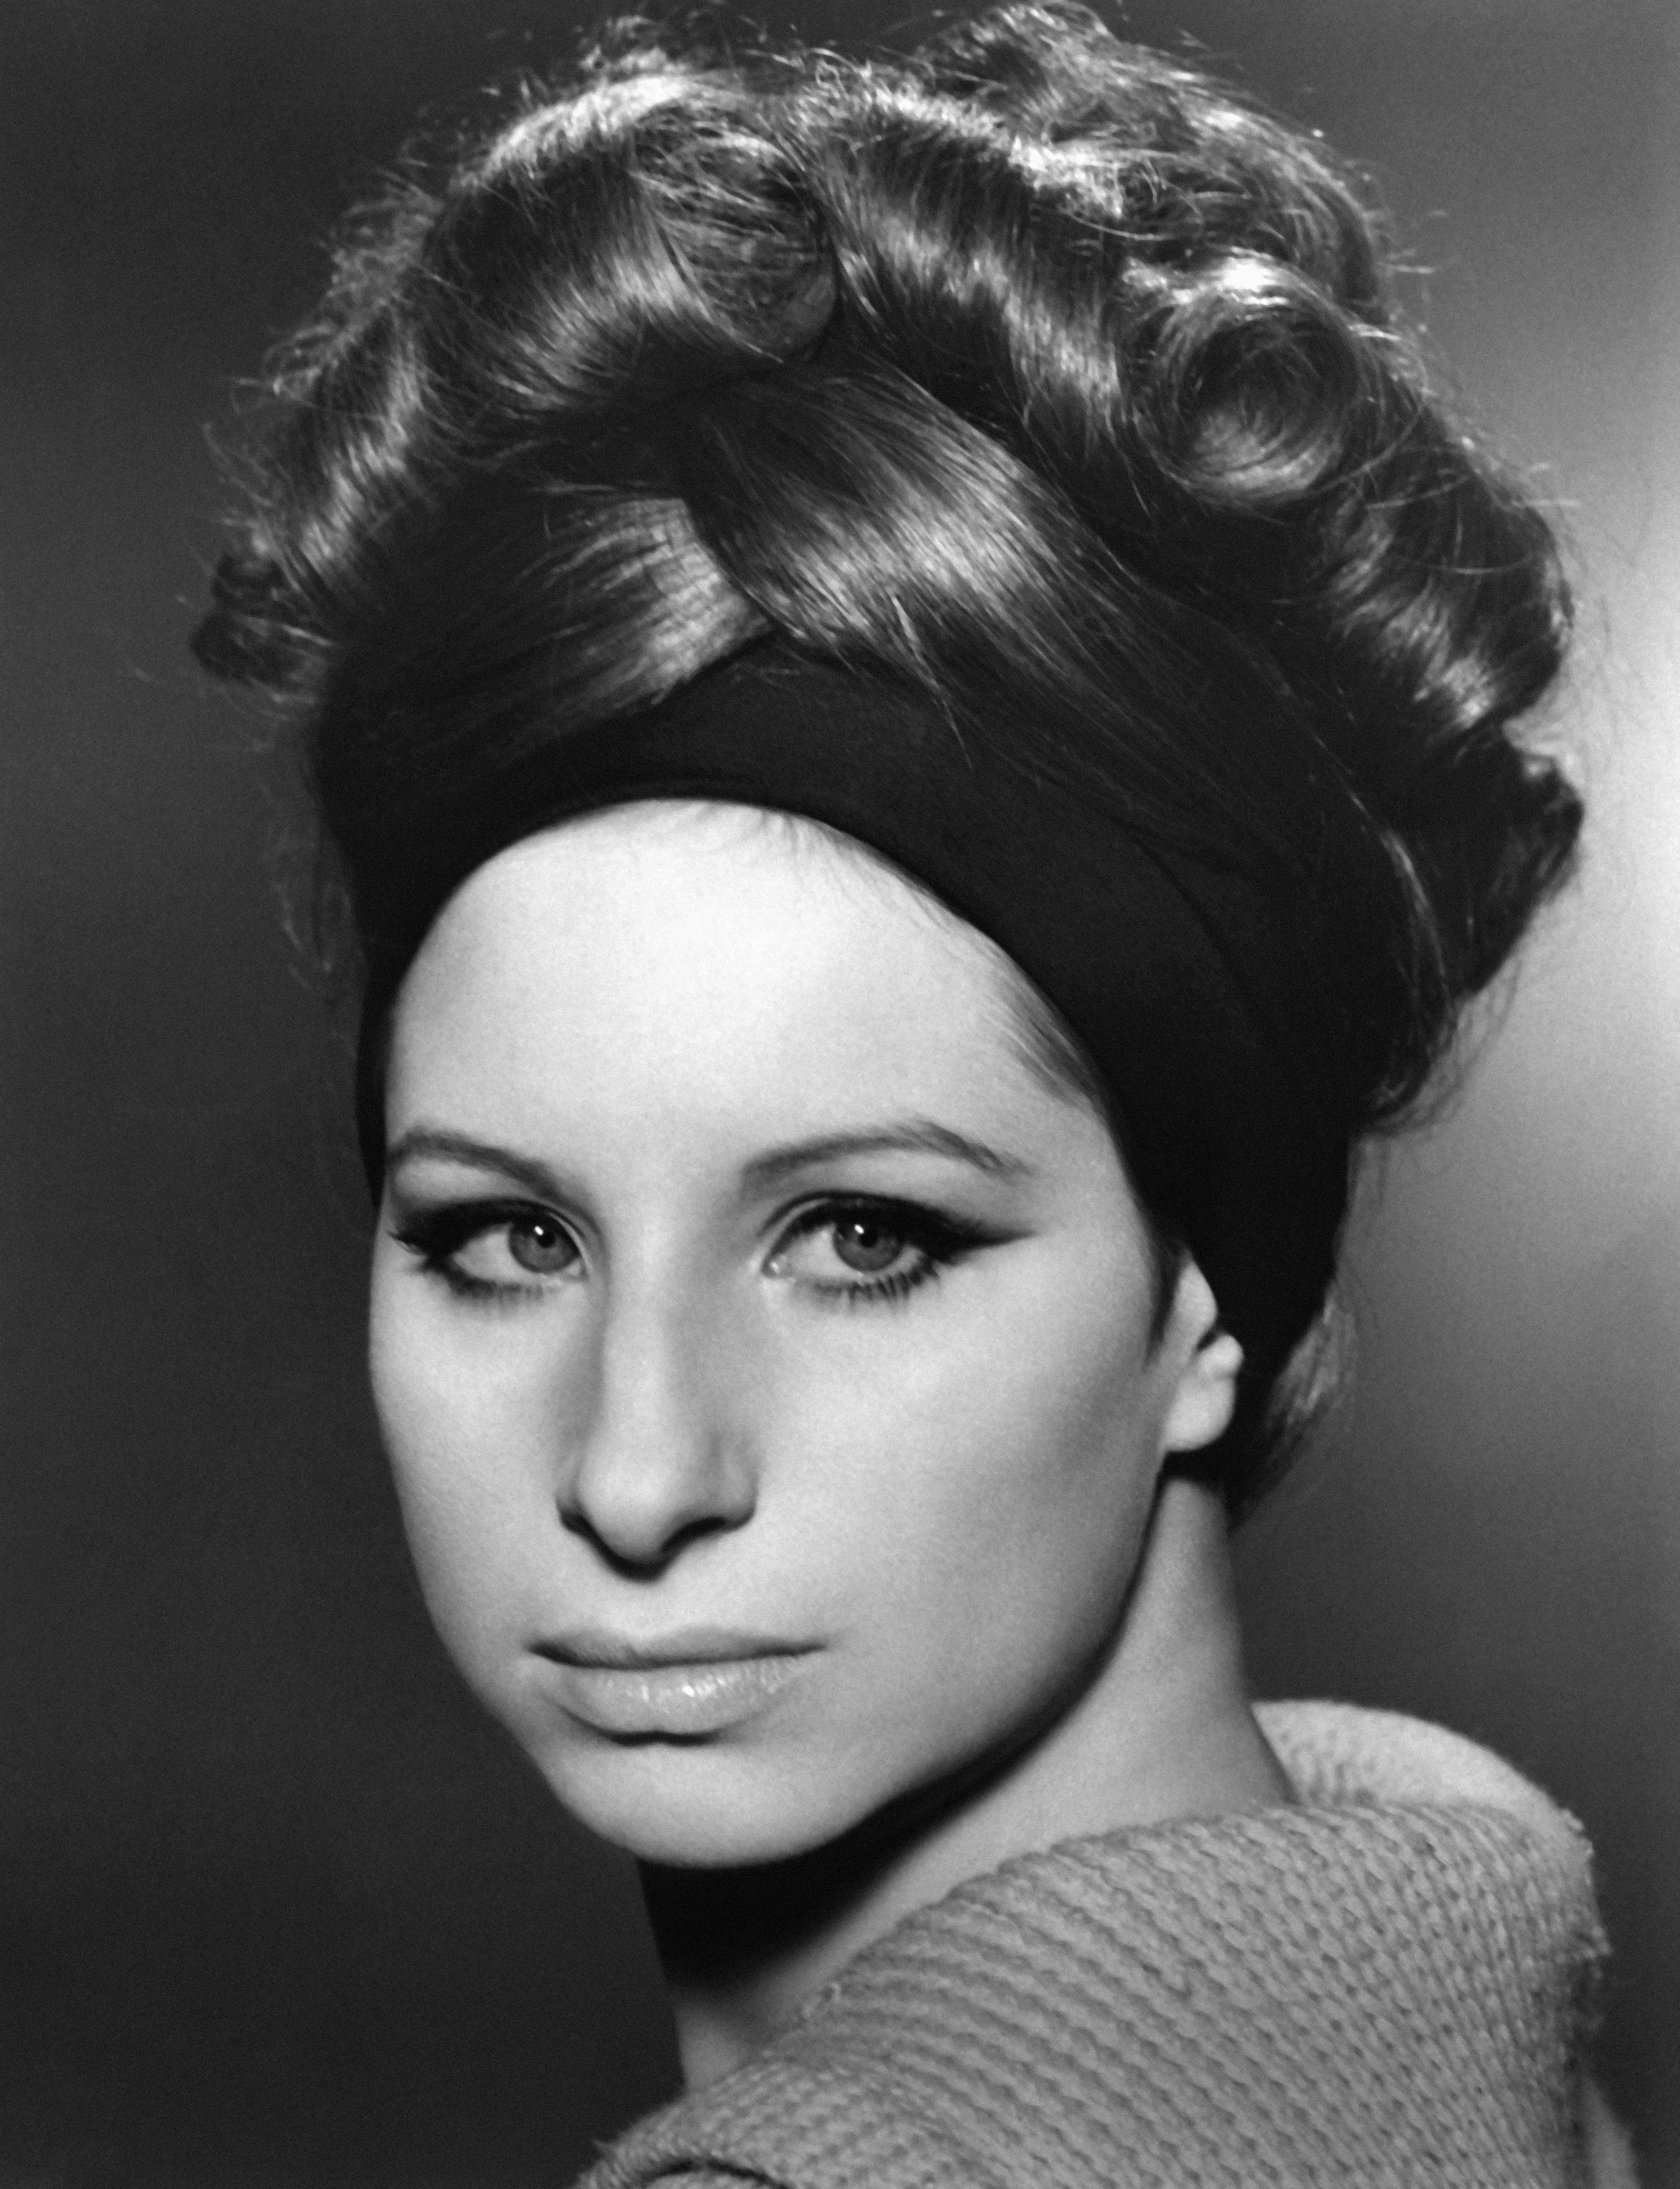 Publicity portrait of Barbra Streisand, 1967 | Source: Getty Images